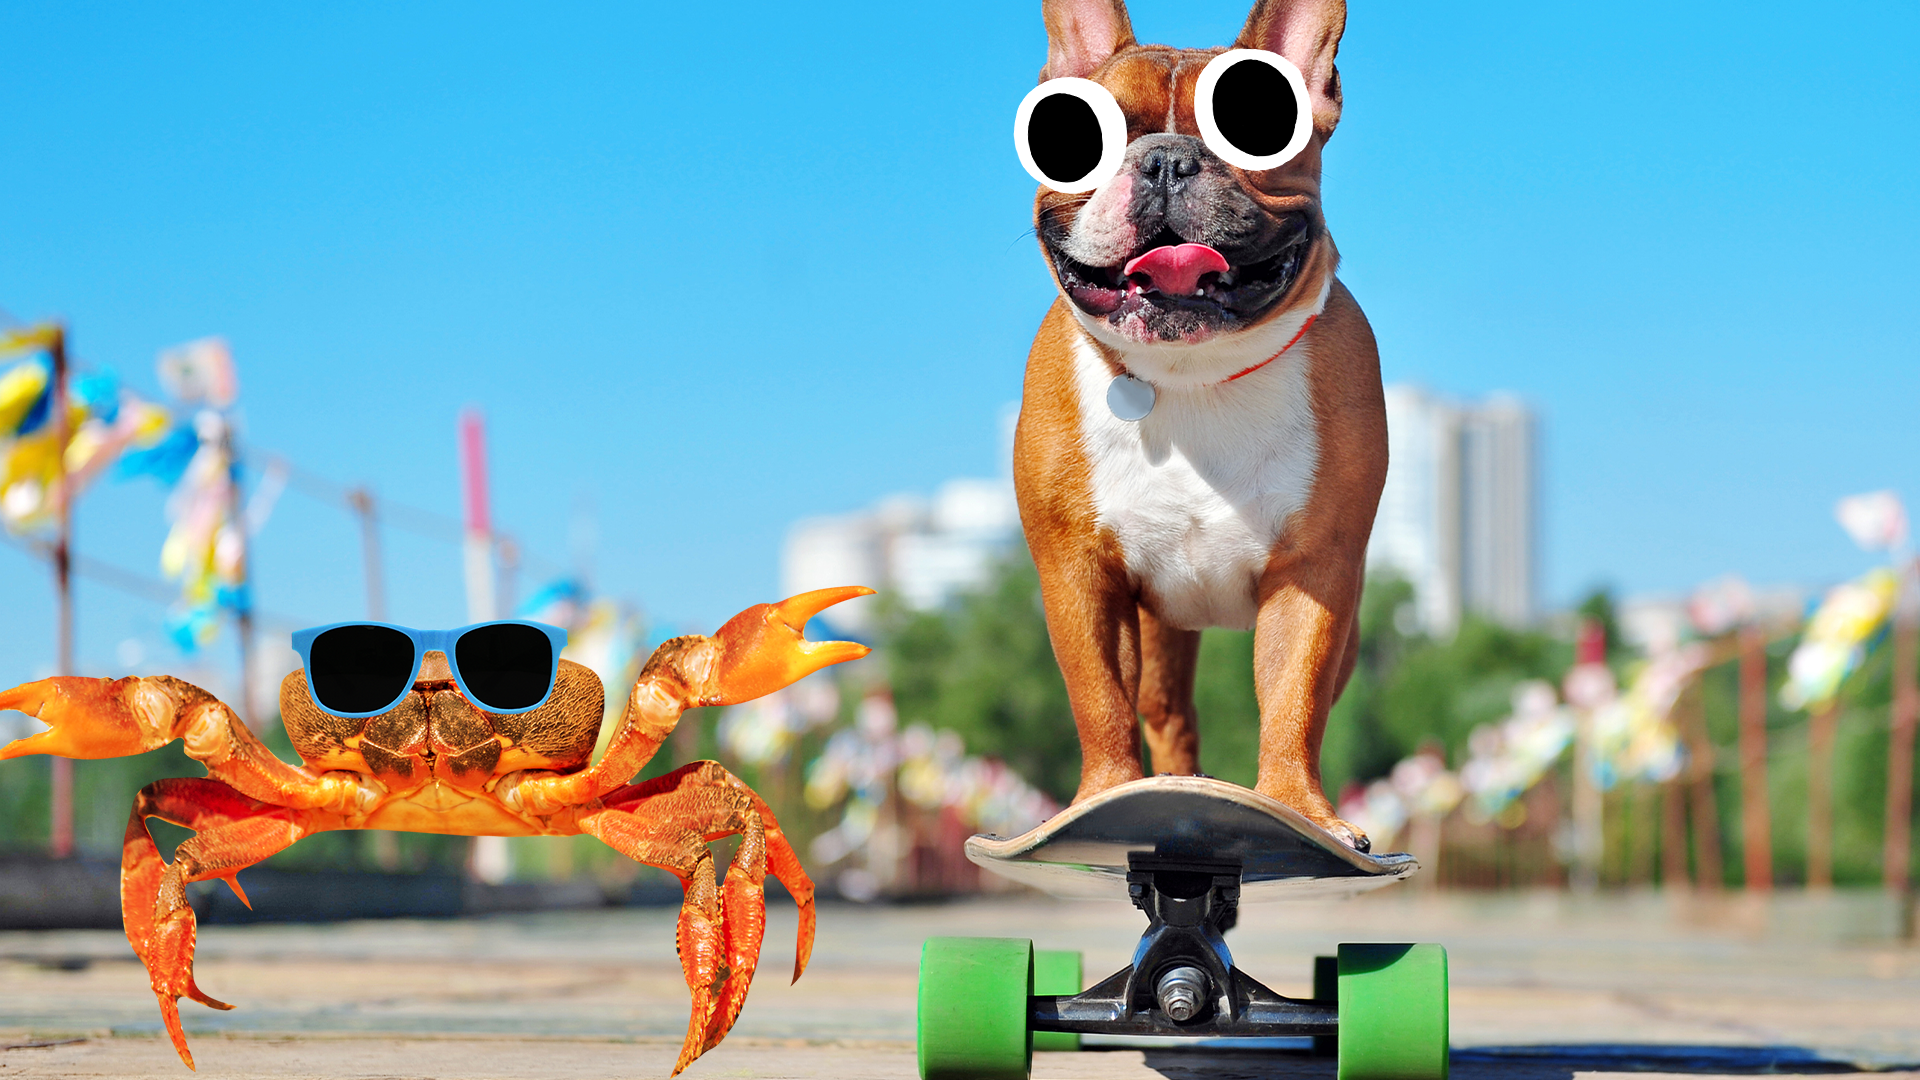 Bulldog on skateboard with cool crab